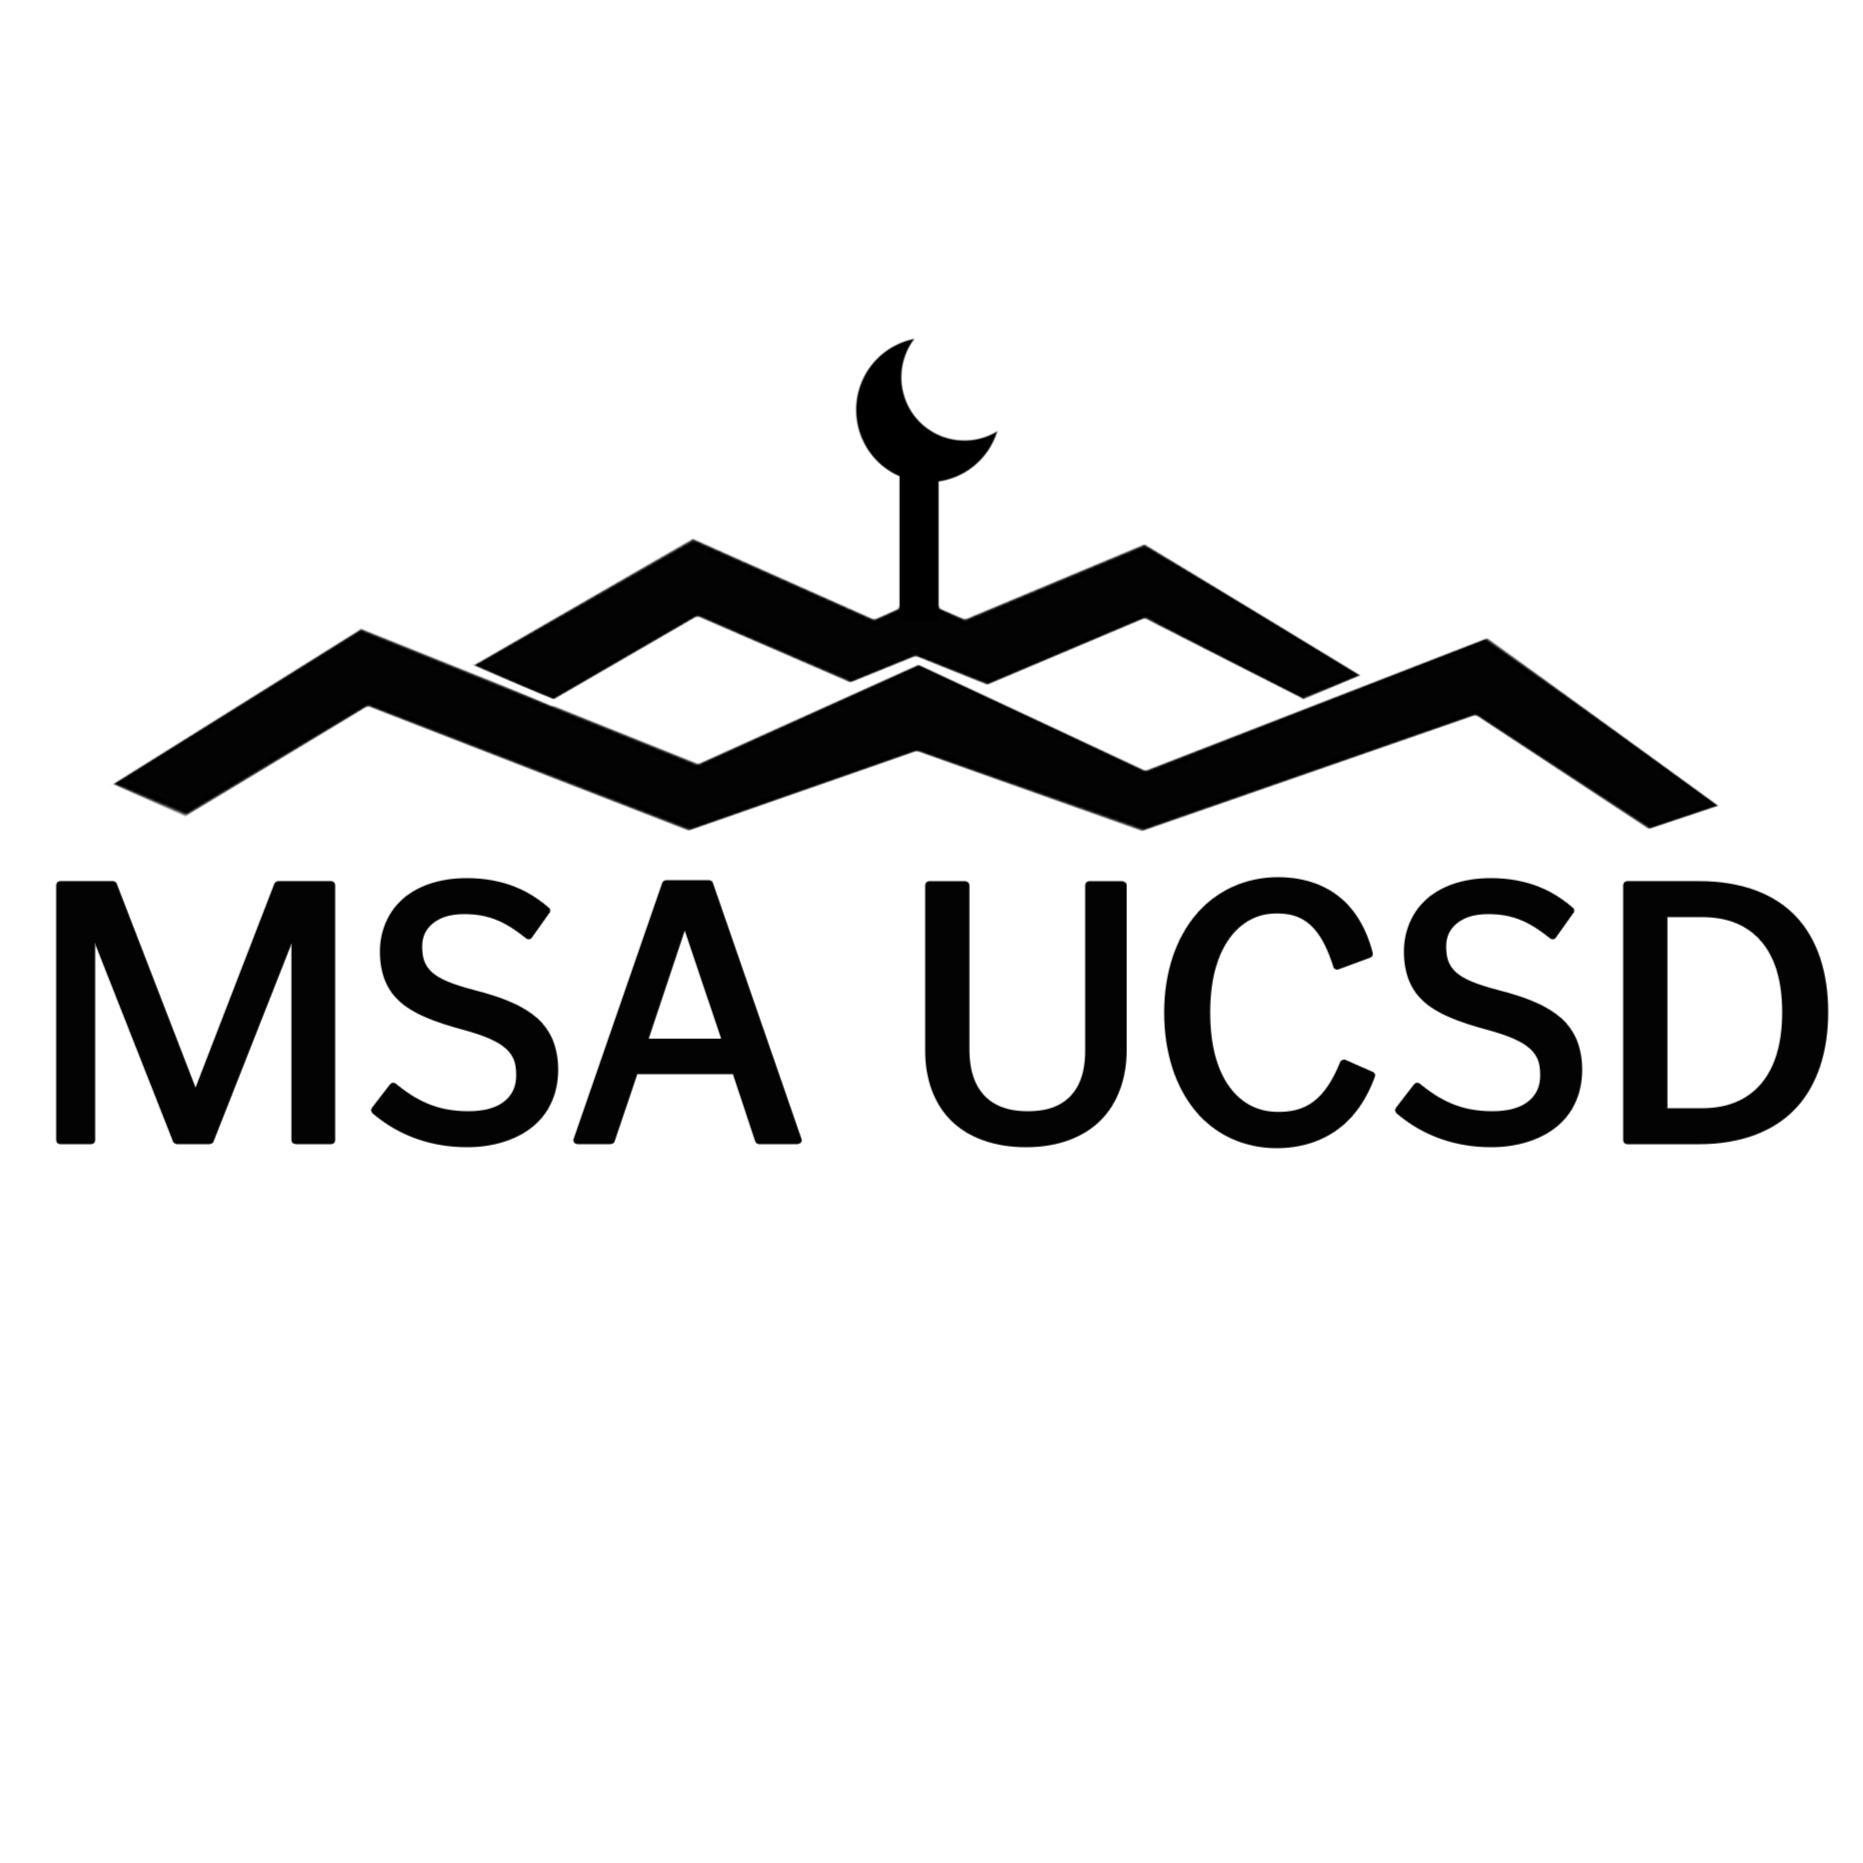 ucsd logo